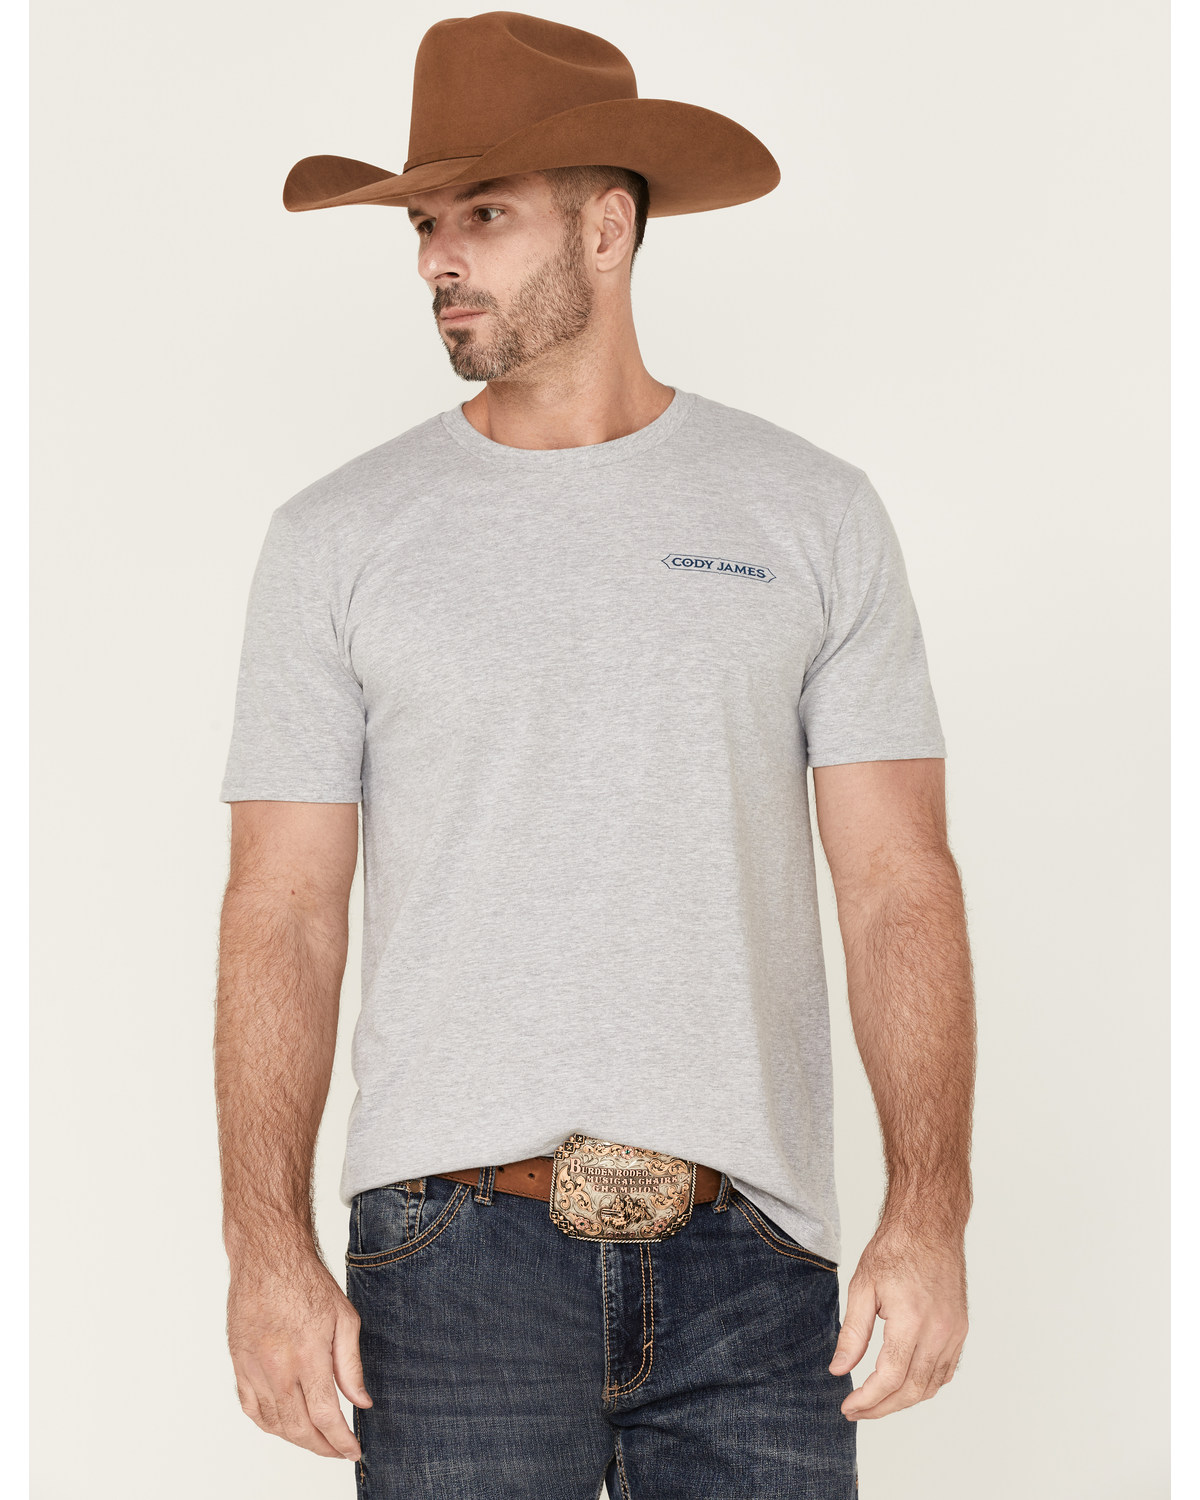 Cody James Men's Horse Shoe Graphic Short Sleeve T-Shirt